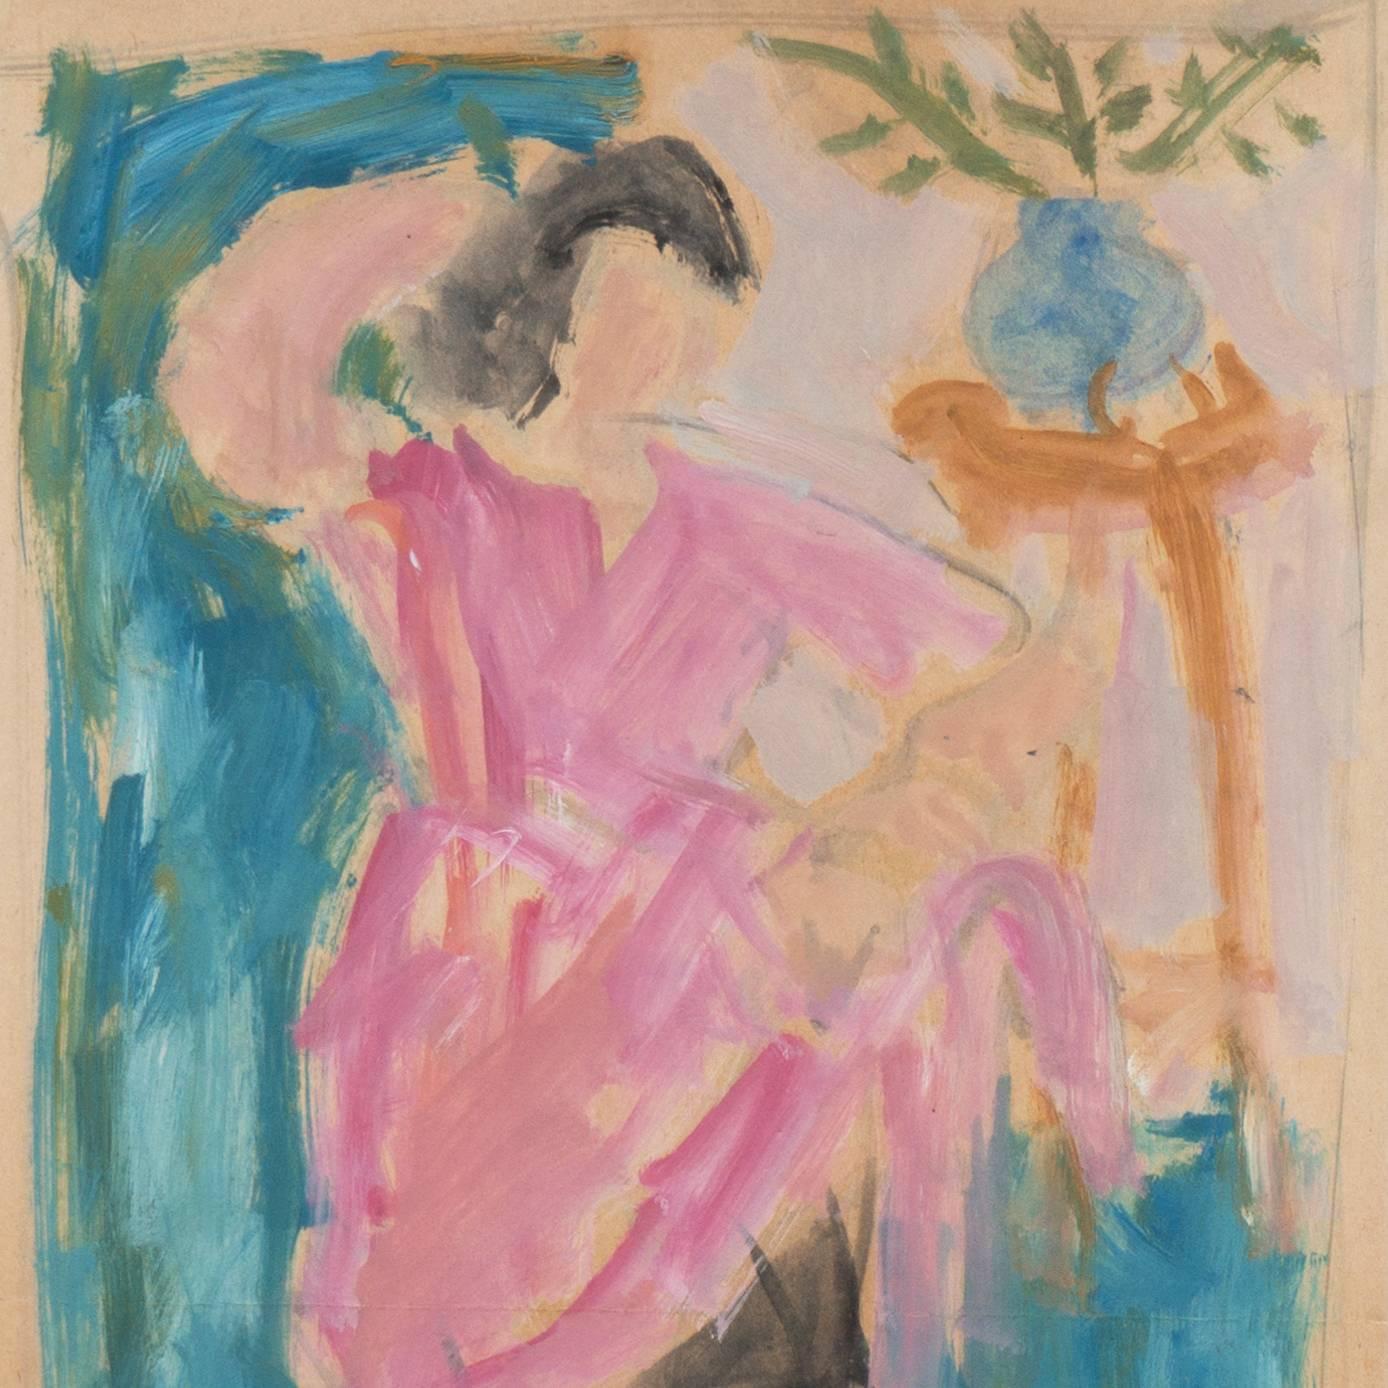 'Dancer in Rose', Paris, Louvre, Académie Chaumière, Carmel, California, LACMA - Painting by Victor Di Gesu